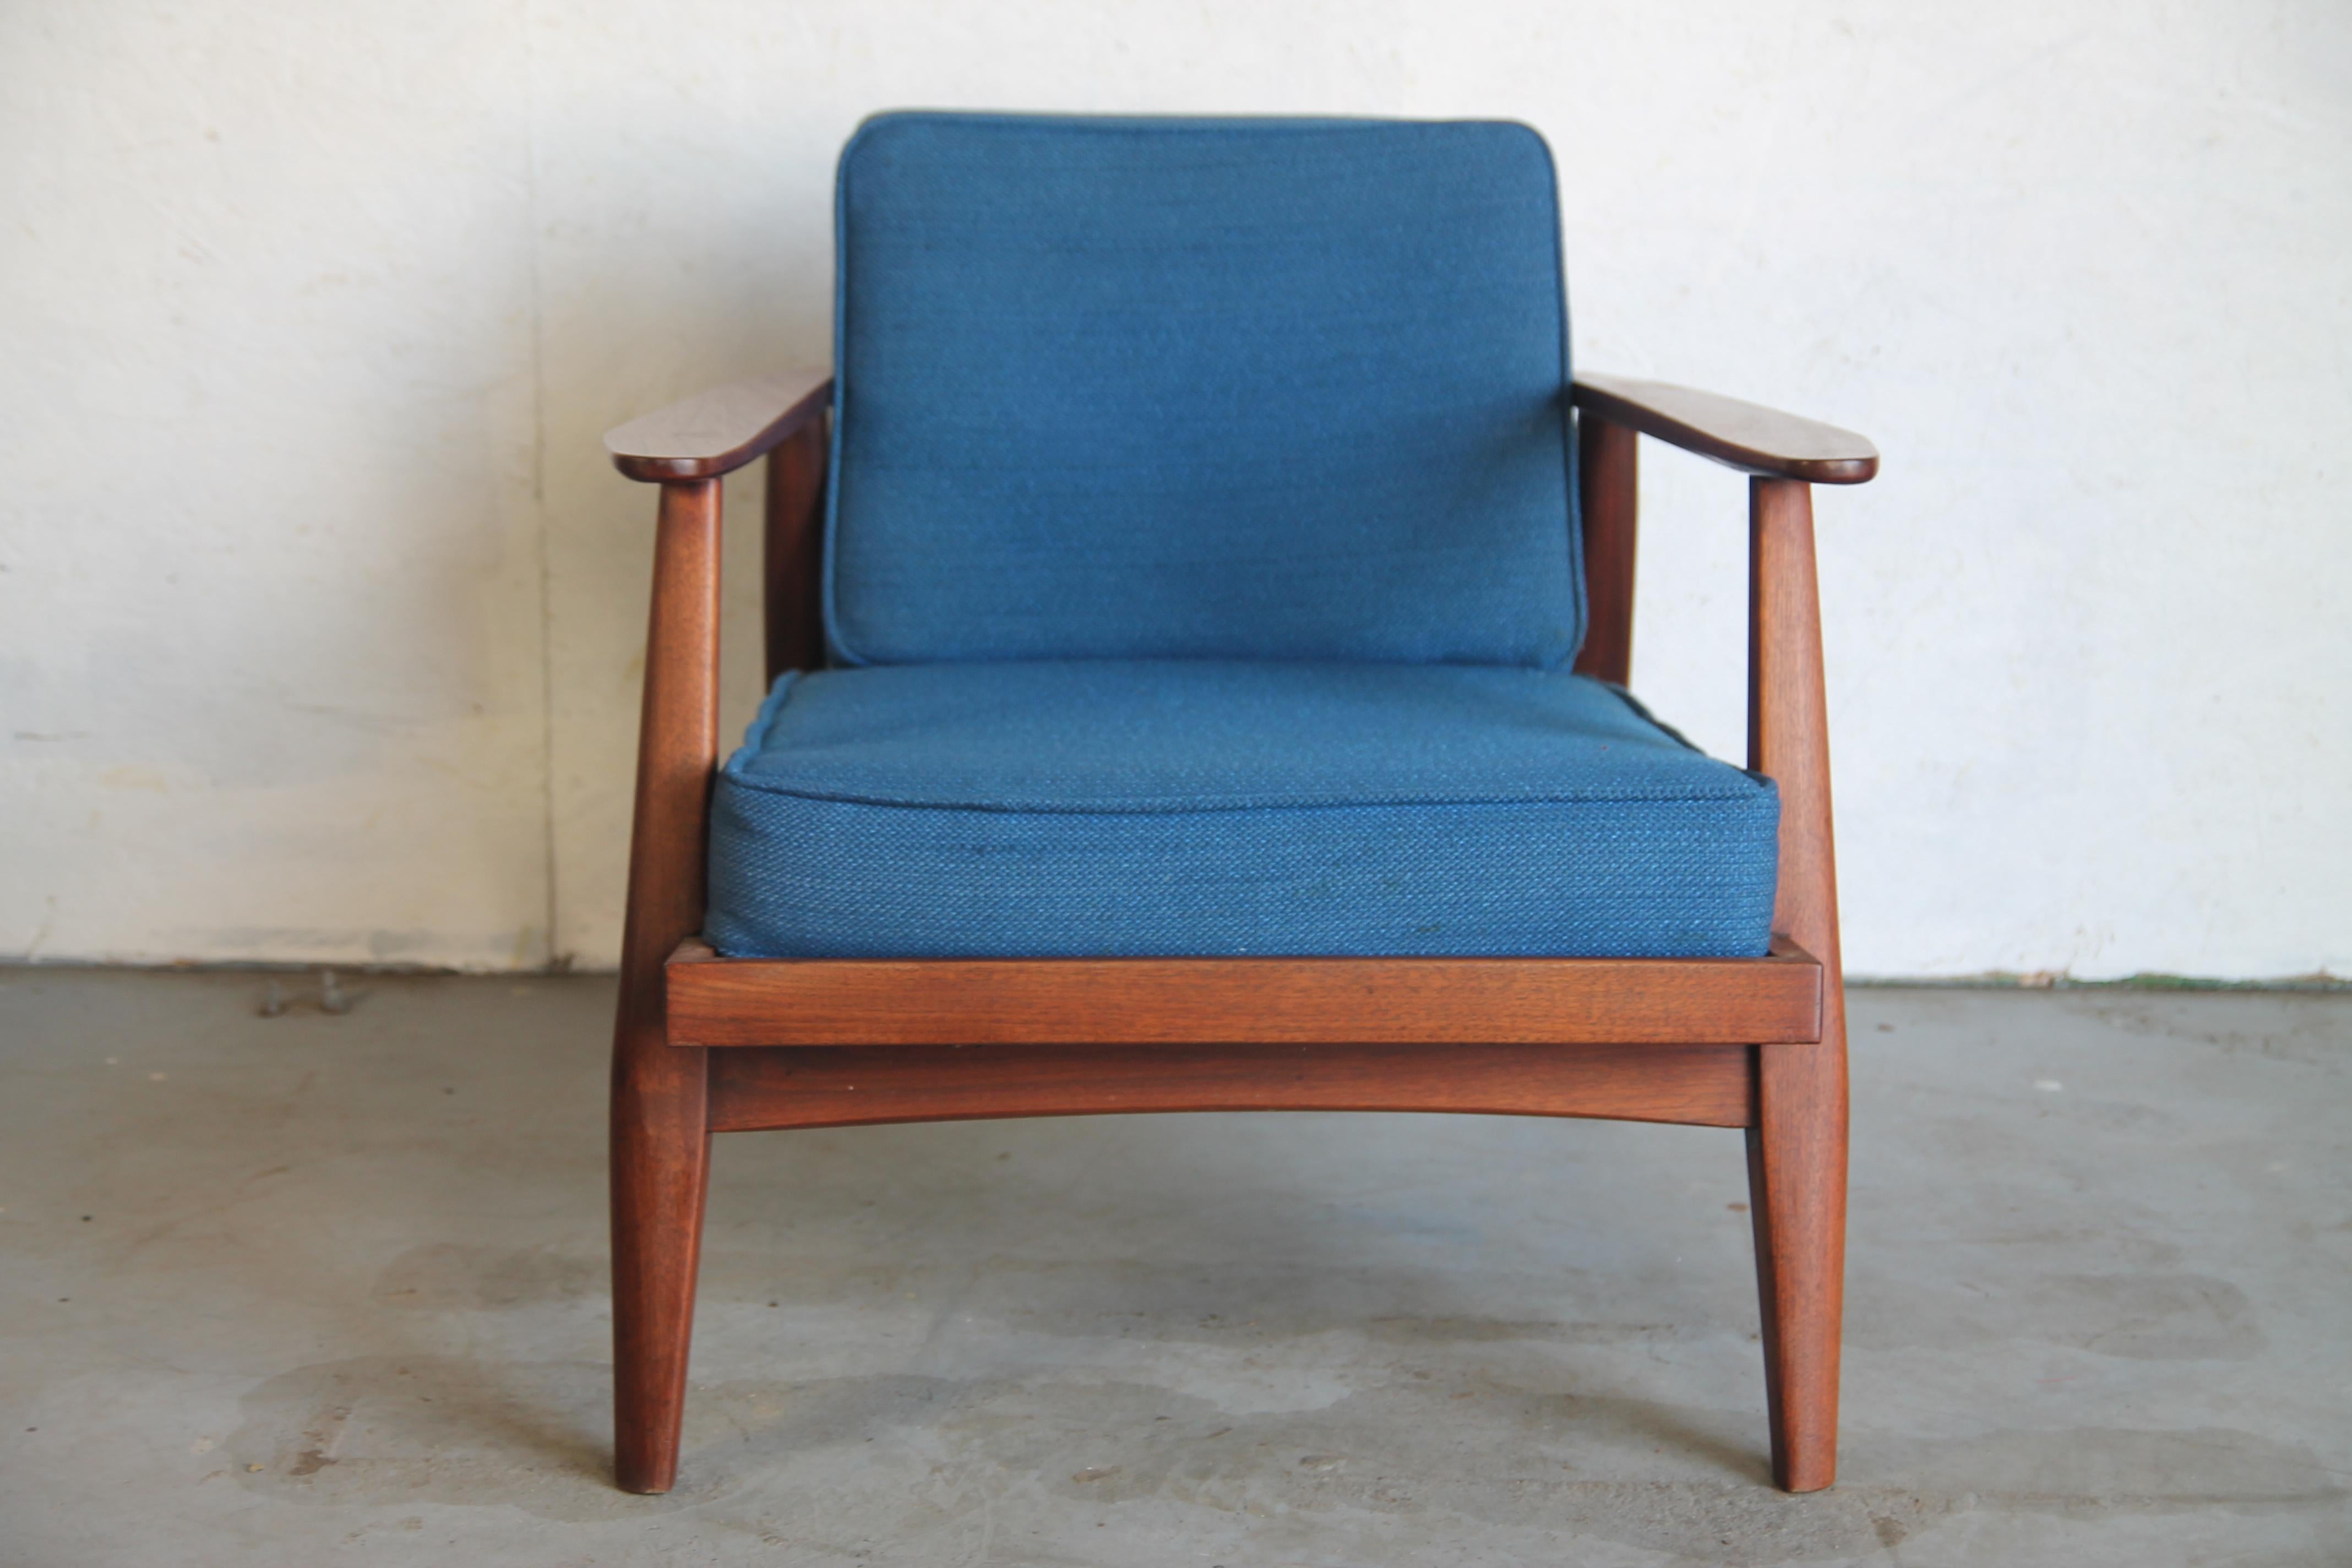 Wonderful 1960s studio designed lounge chair. Walnut chair has interesting design featured. In nice original condition.